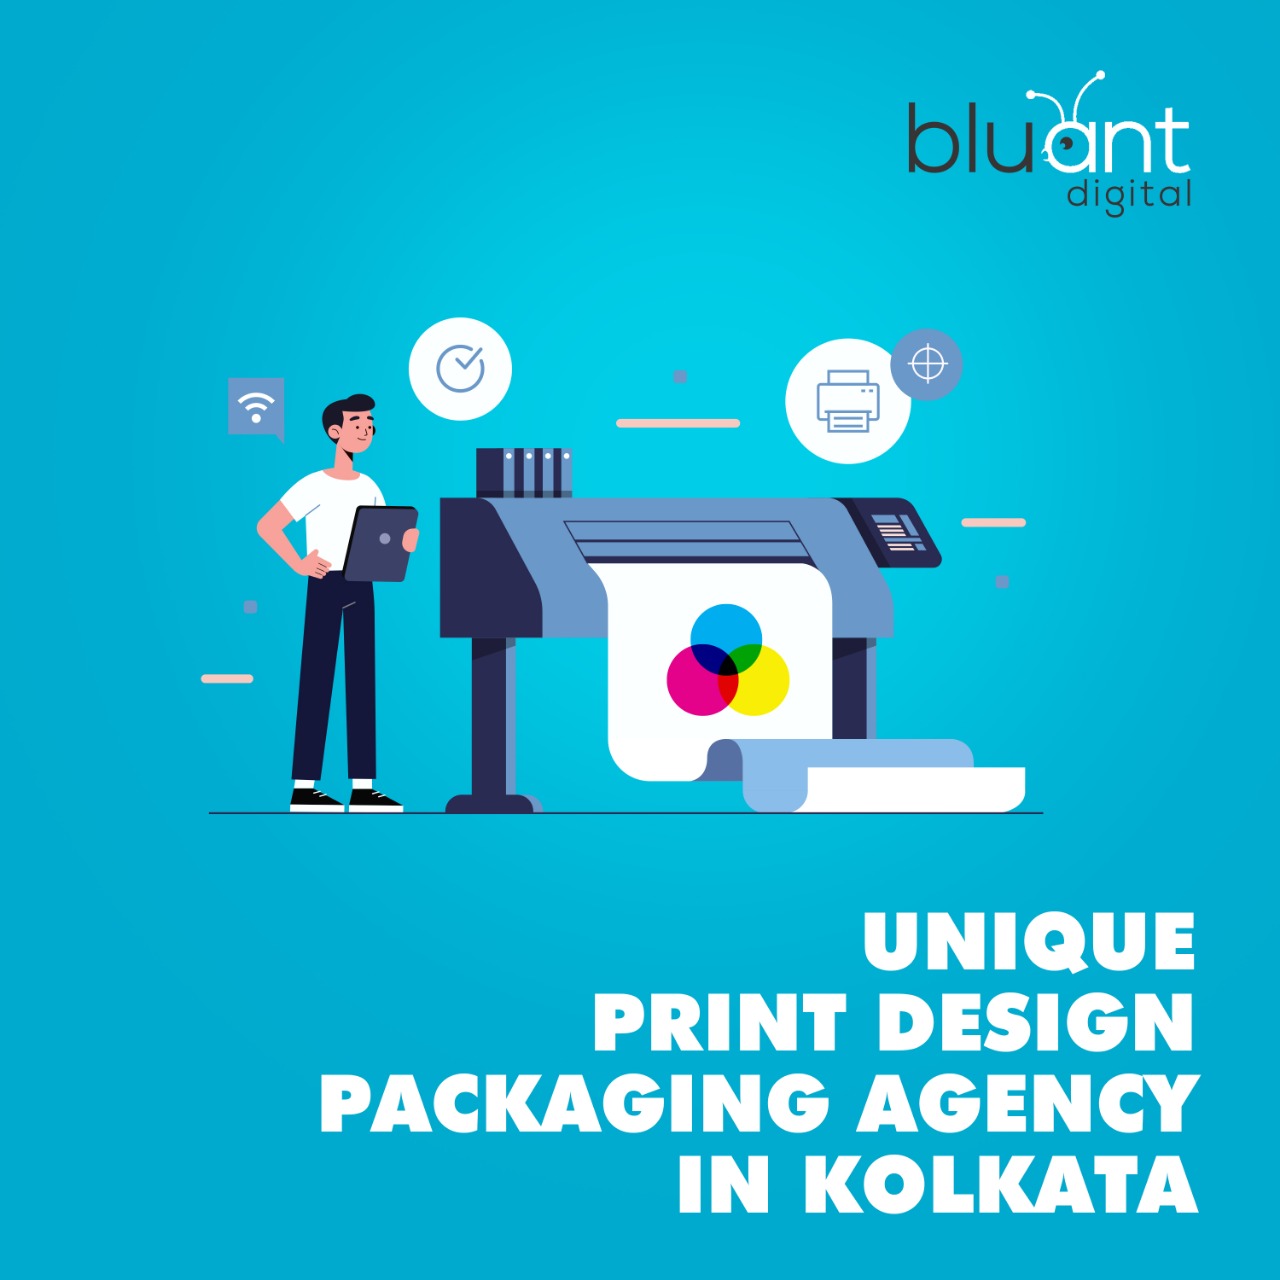 Unique Print Design Packaging Agency in Kolkata